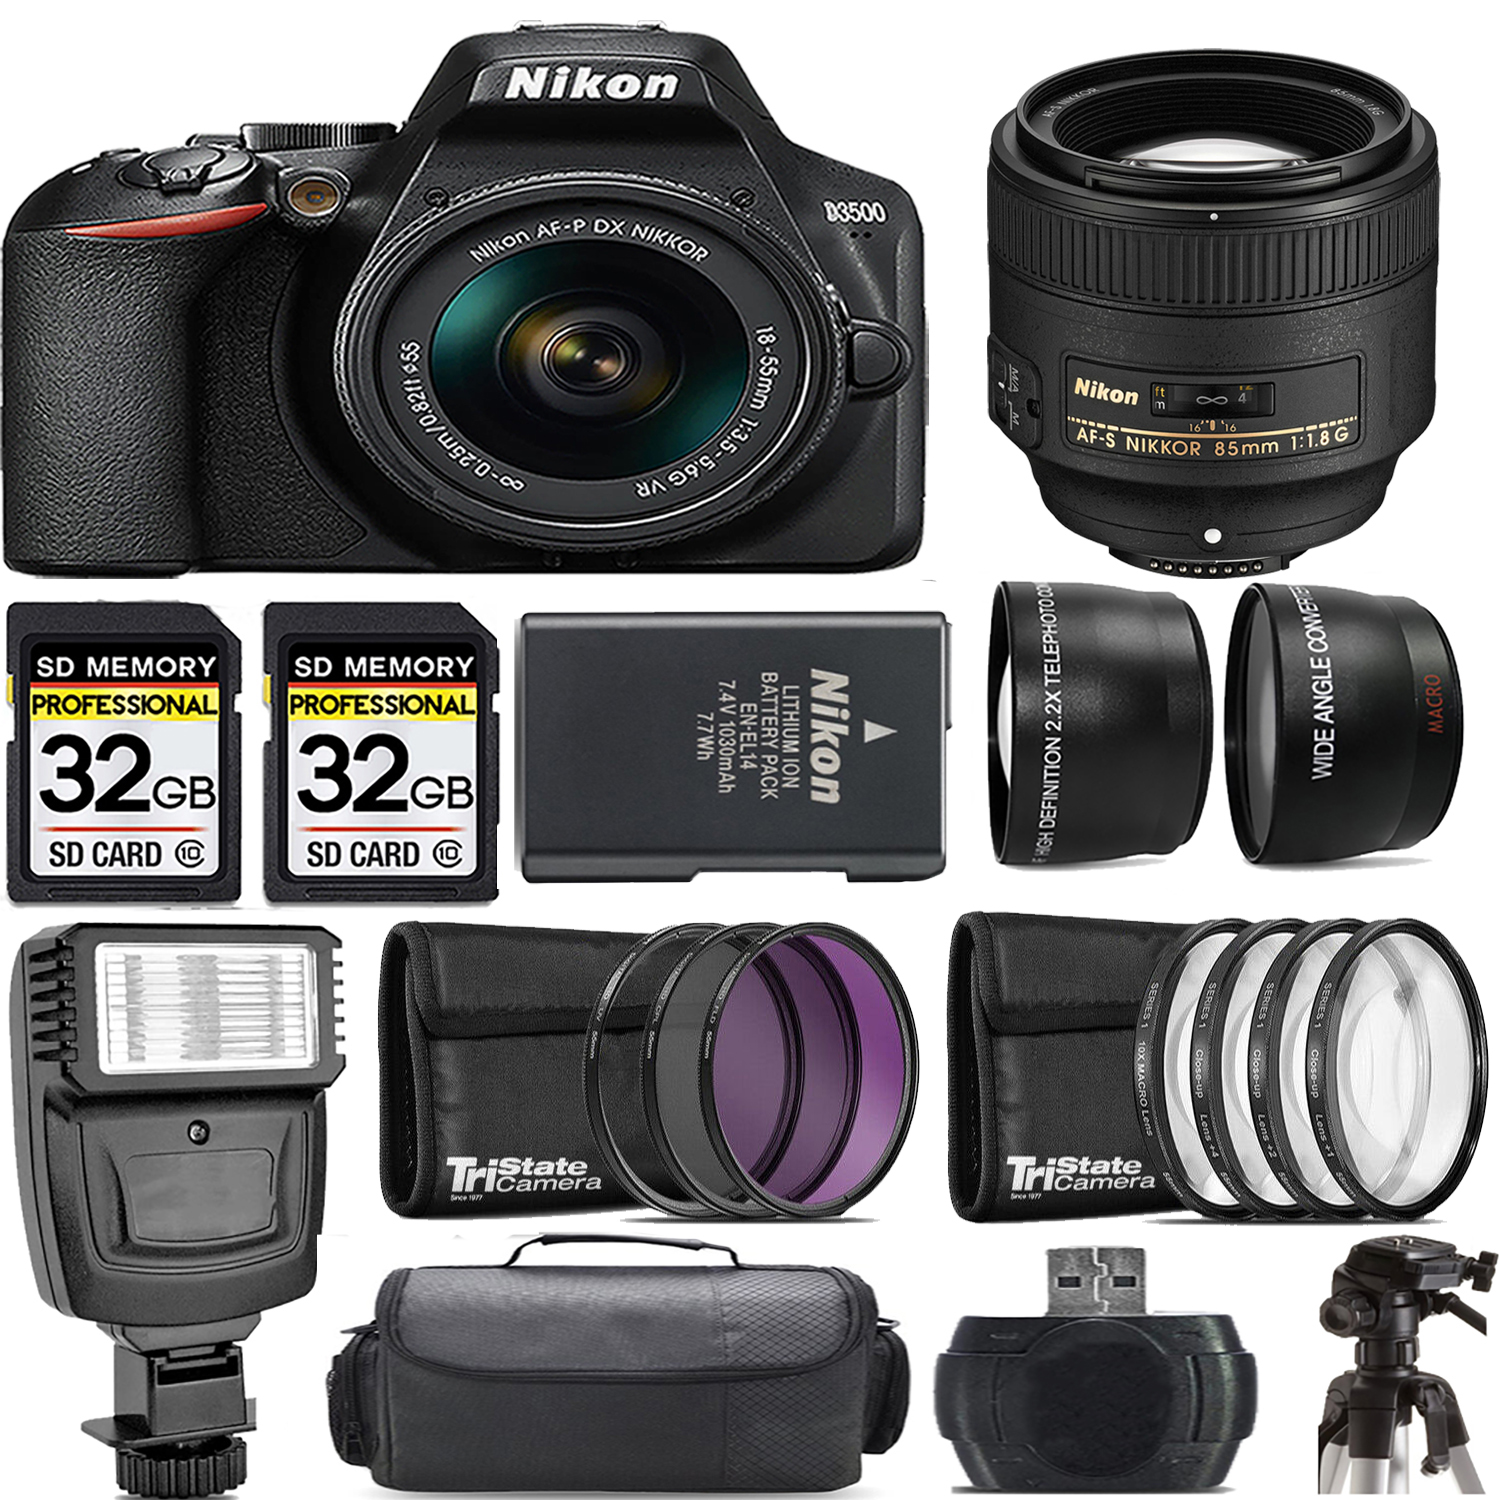 D3500 DSLR Camera with 18-55mm Lens + 85mm f/1.8G Lens + Flash - Kit *FREE SHIPPING*